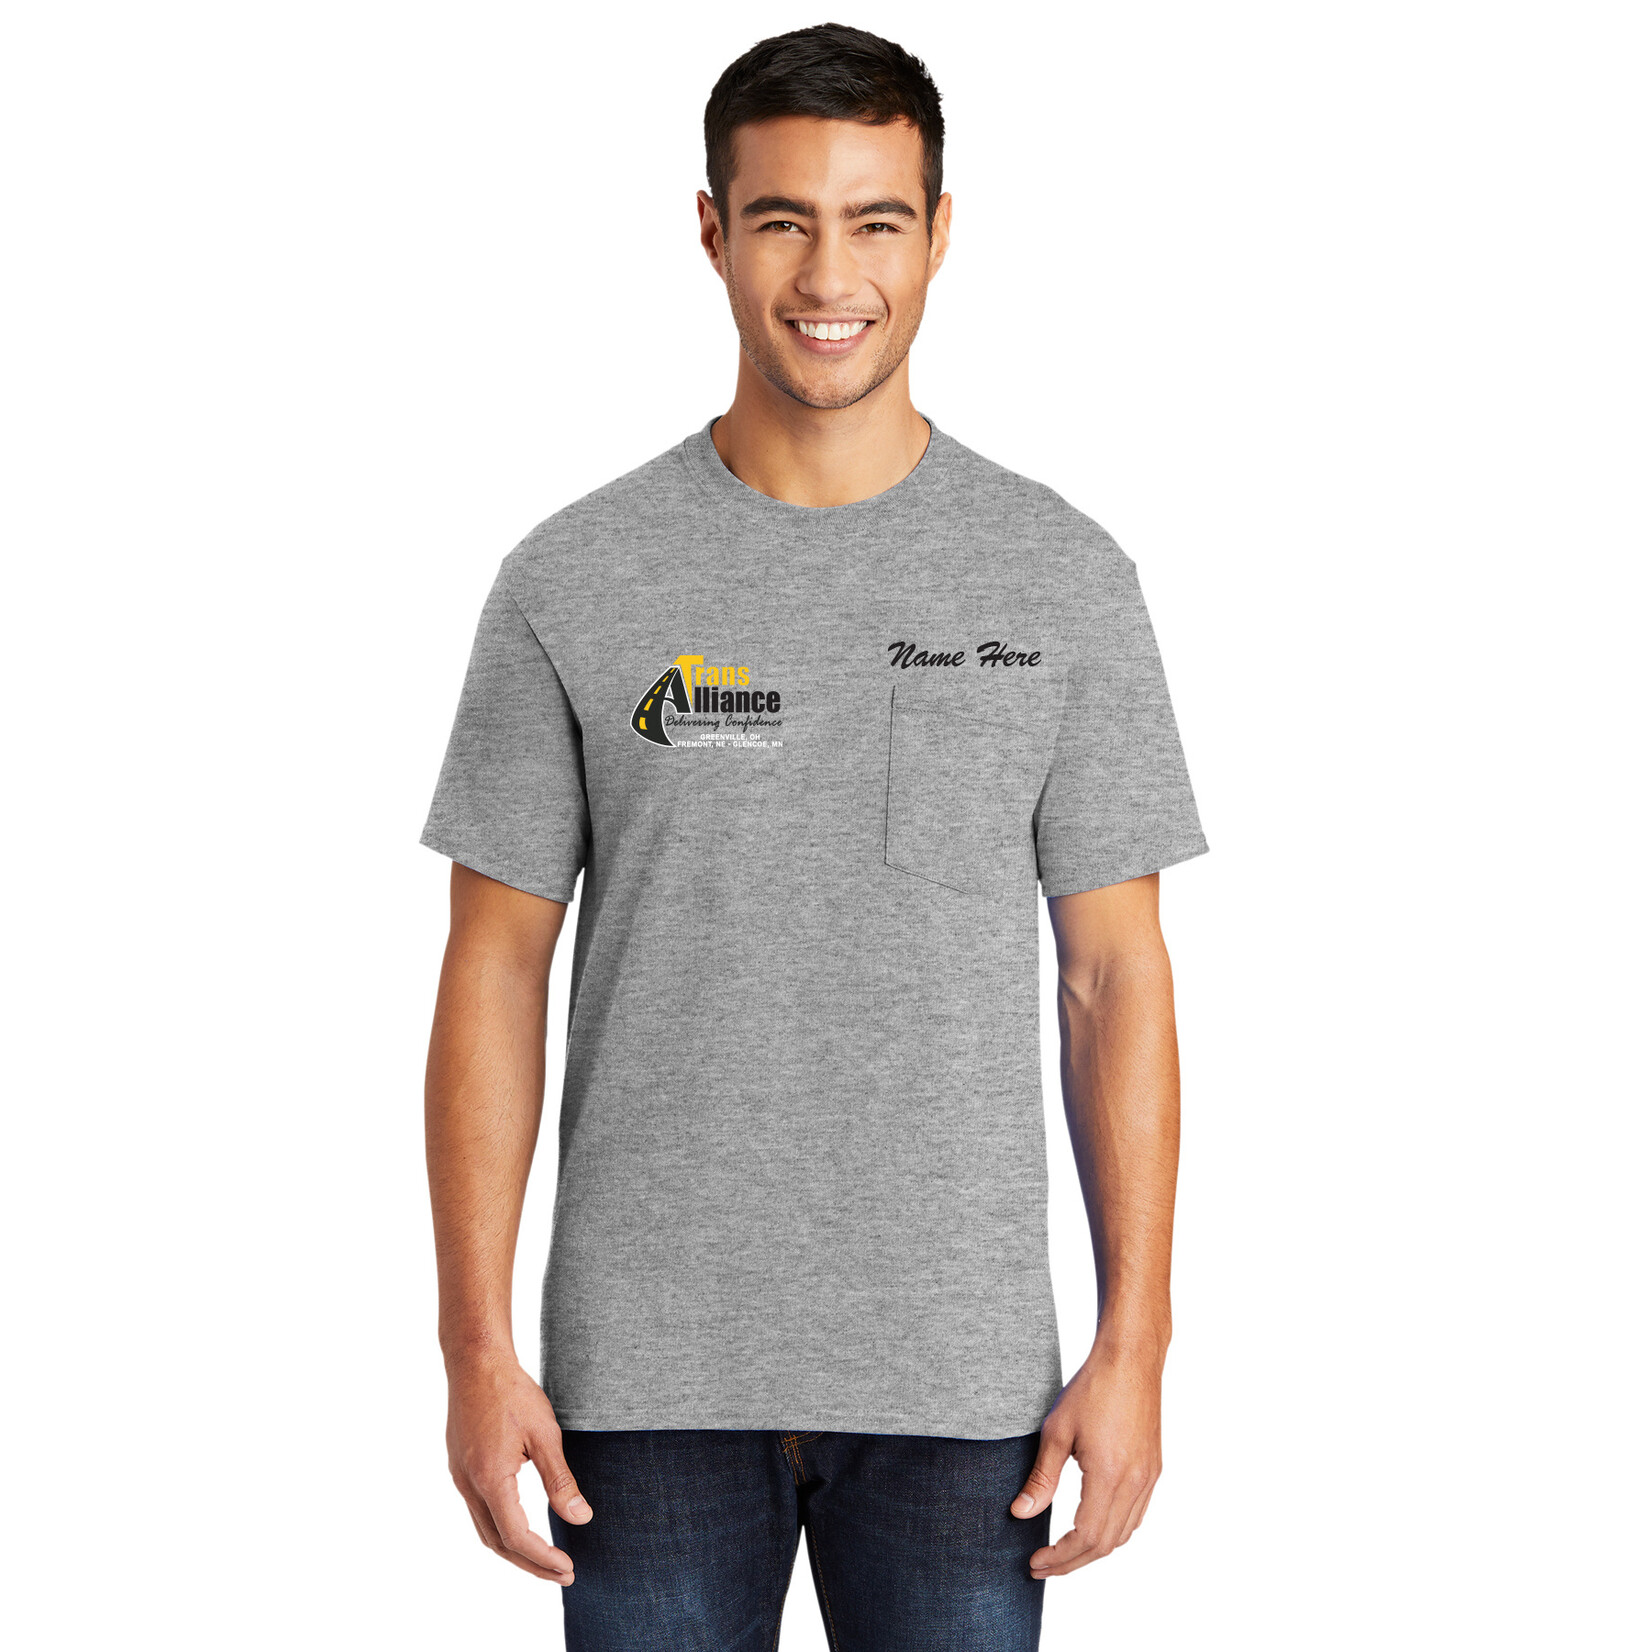 Trans Alliance_Pocket T-shirt